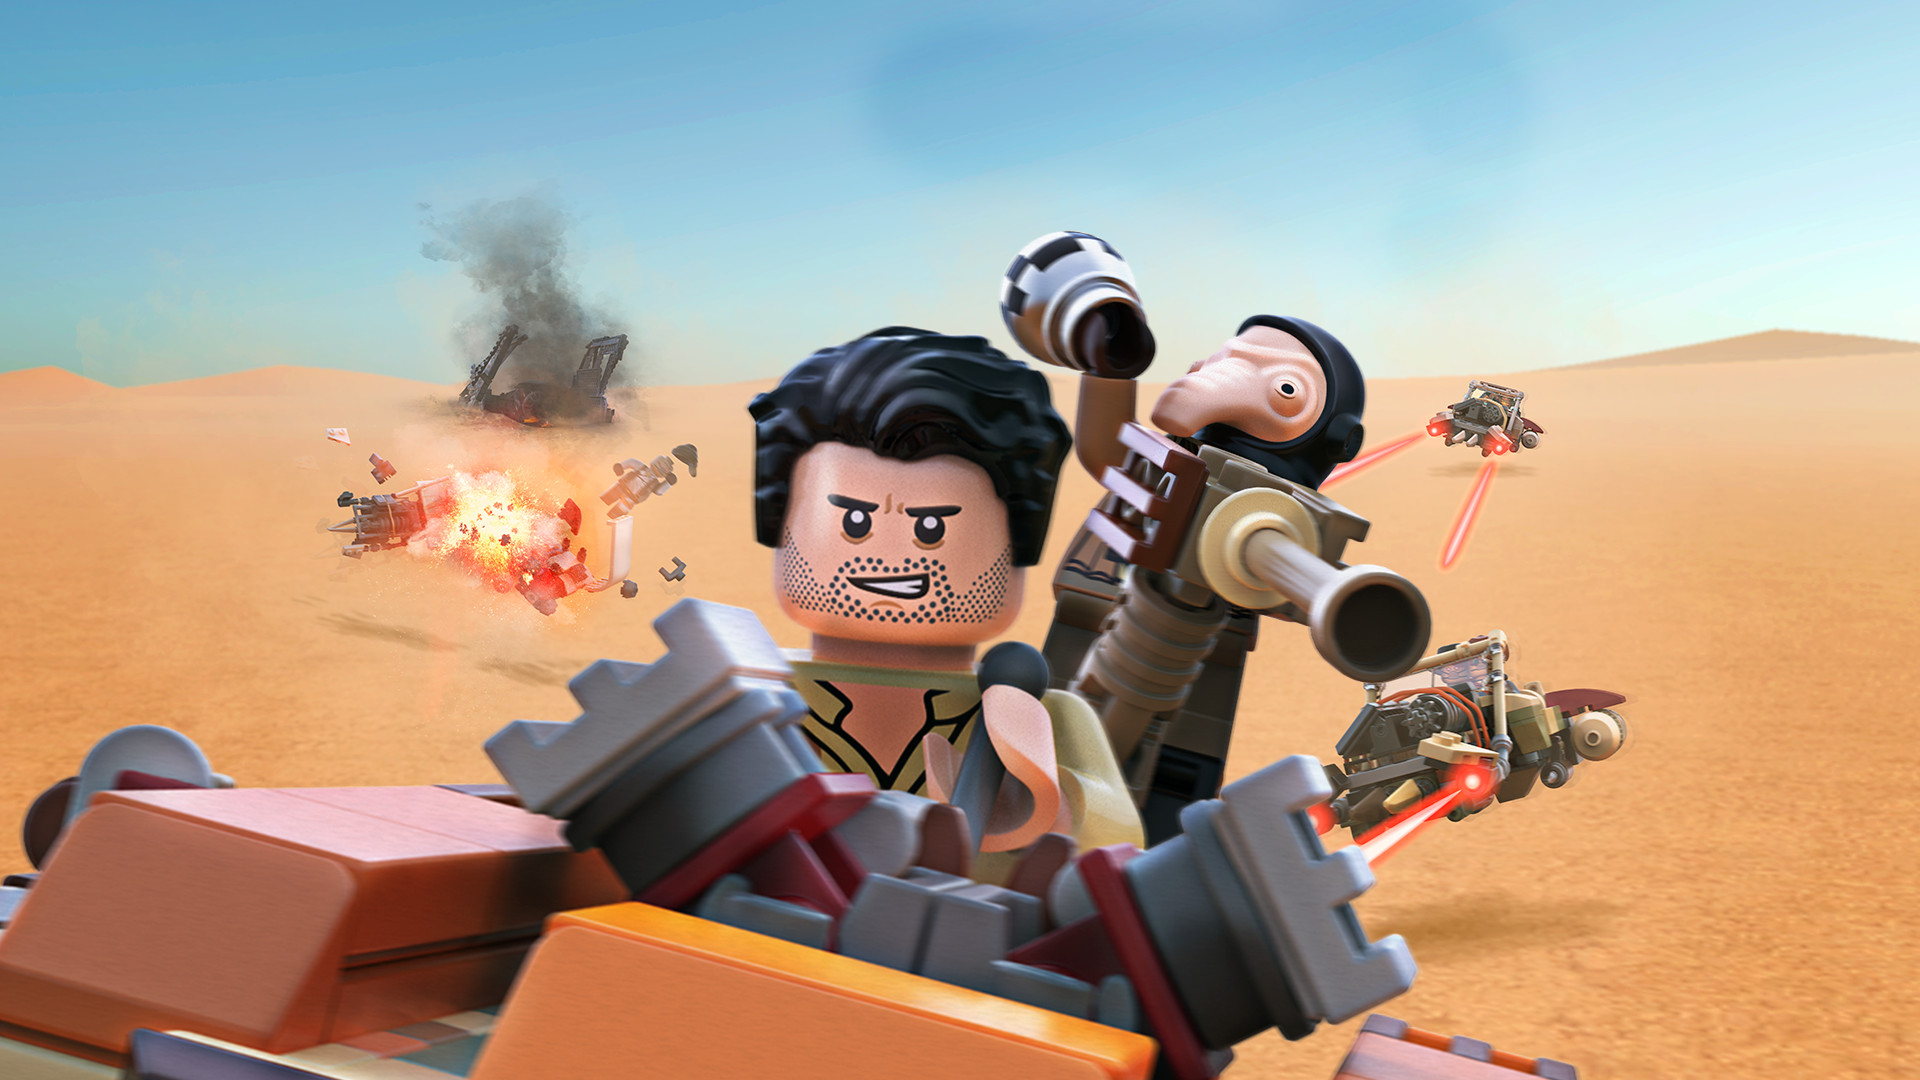 LEGO Star Wars: The Force Awakens - Jakku: Poe's Quest for Survival DLC Steam CD Key [$ 2.25]